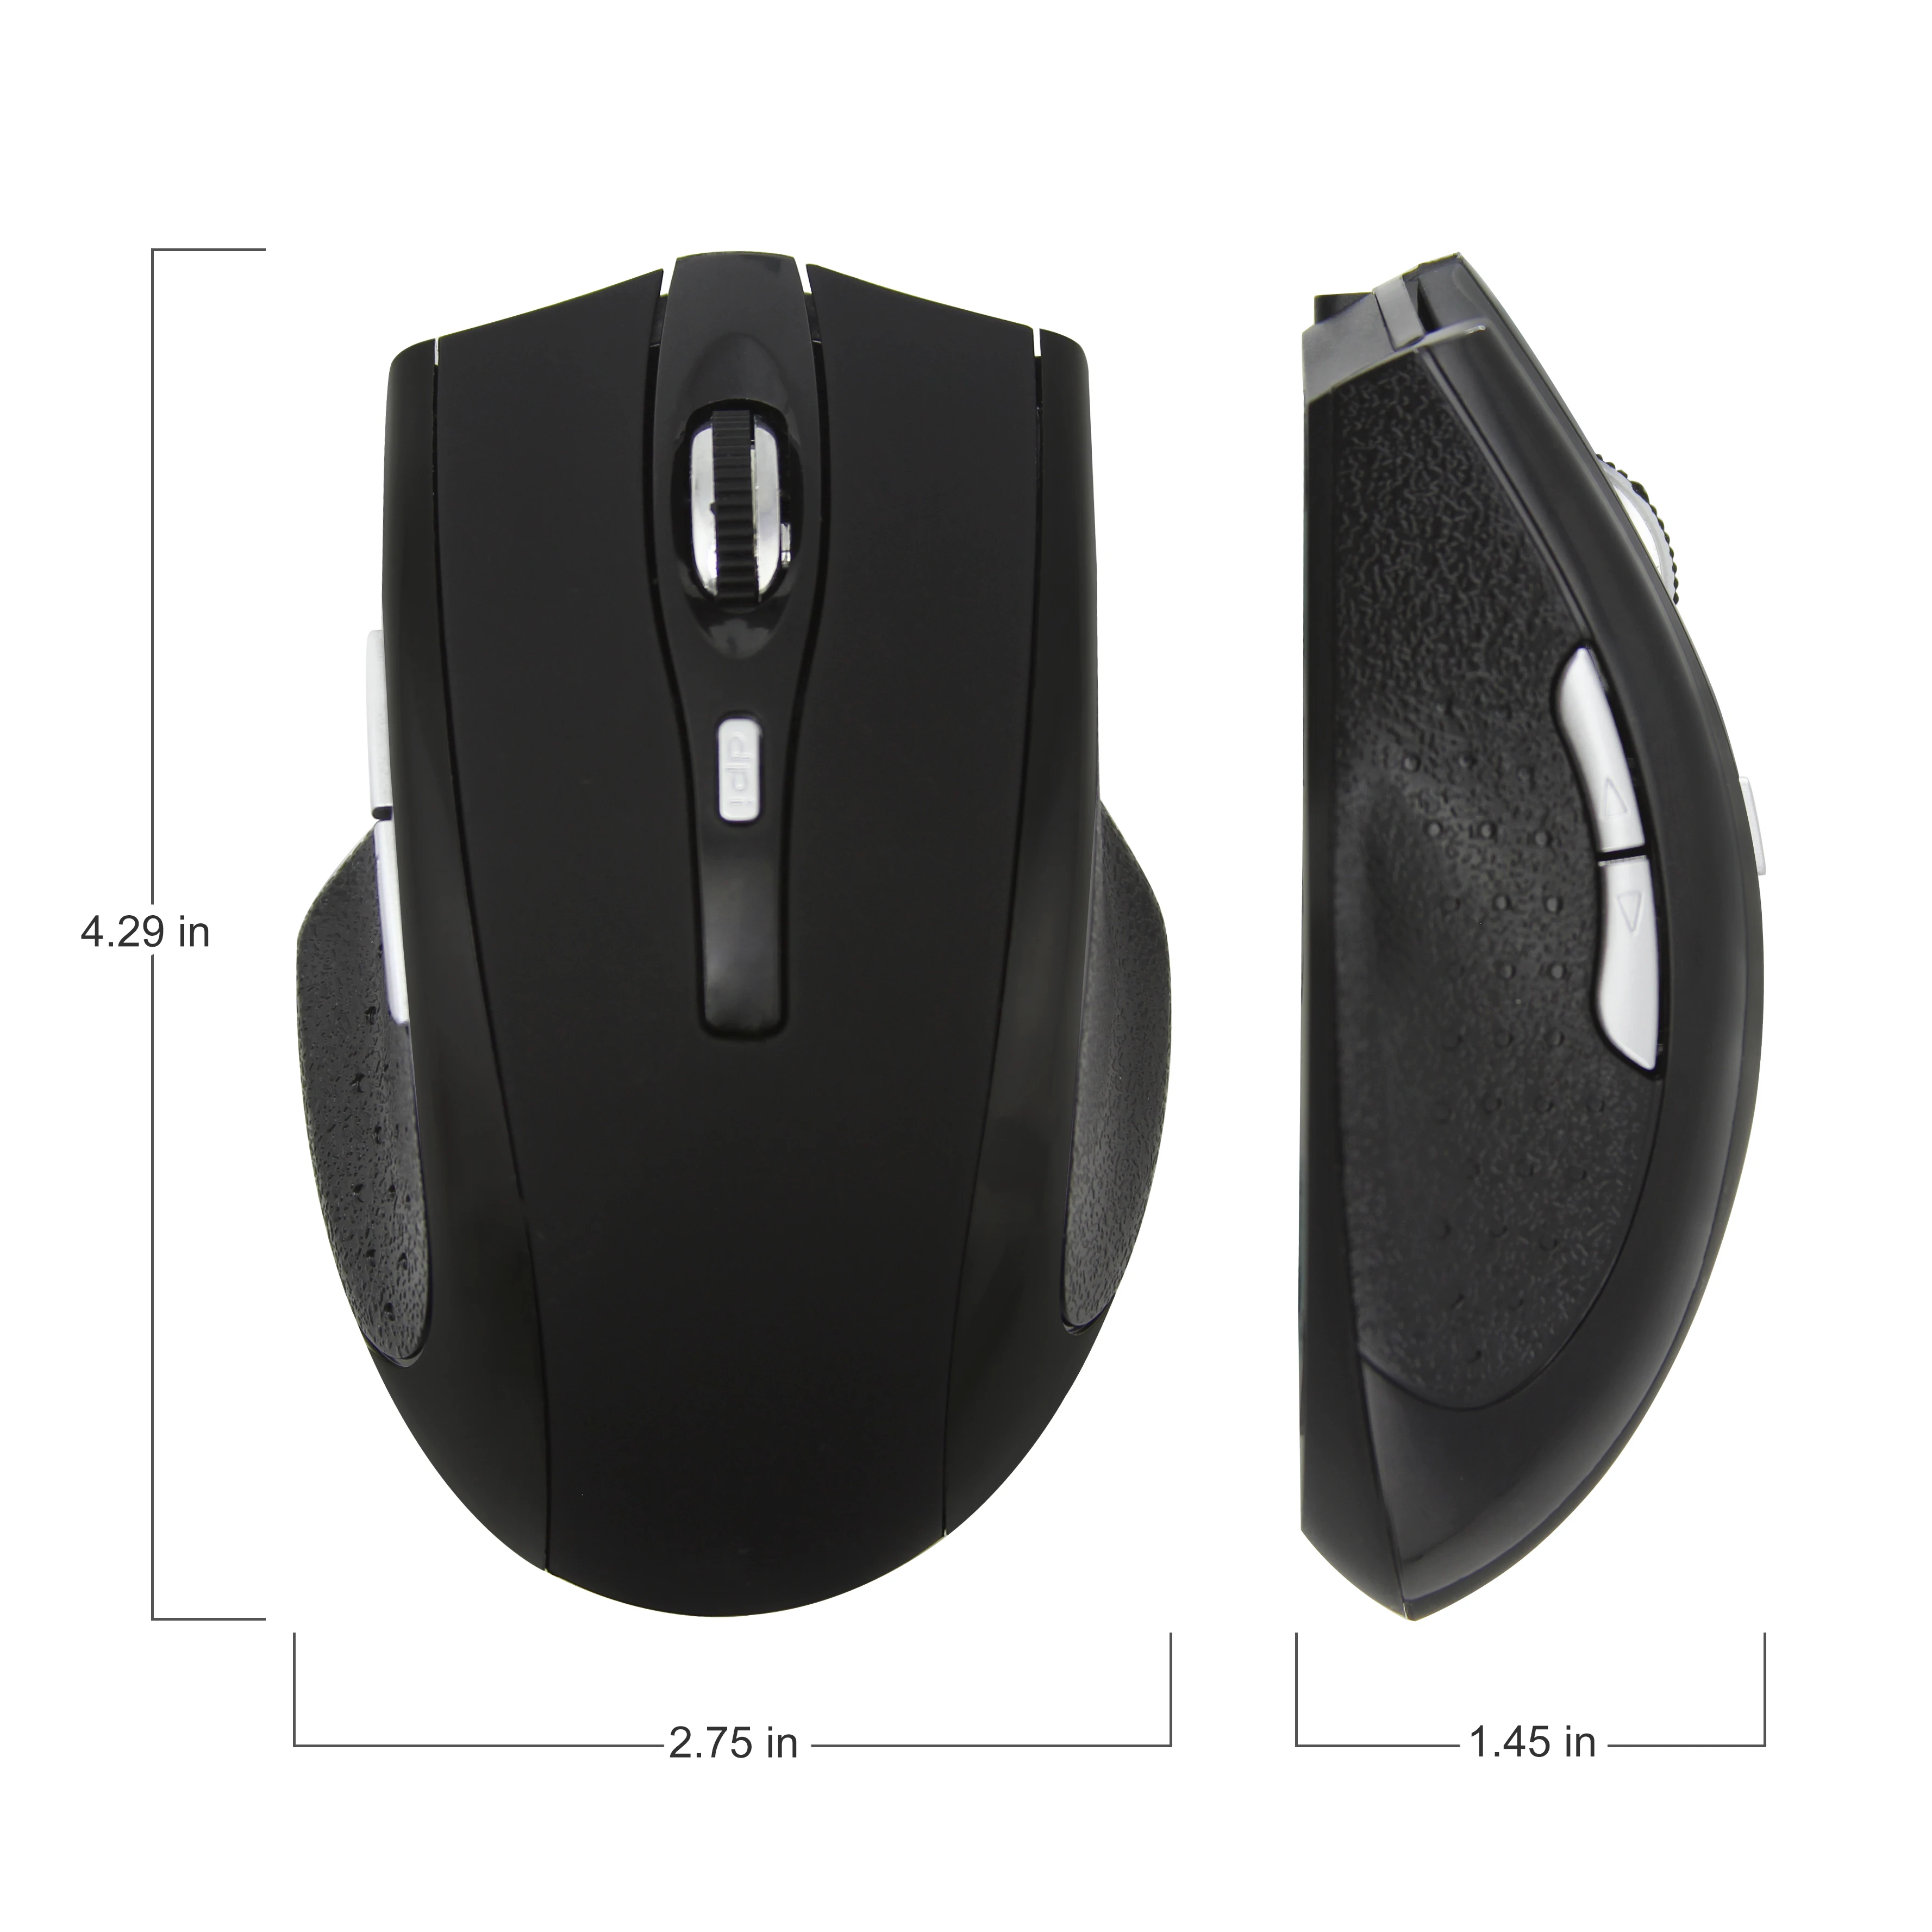 chuyi bluetooh mouse rechargeable adjustable 80010001600dpi silent ergonomics gaming mice for laptop desktop free global shipping